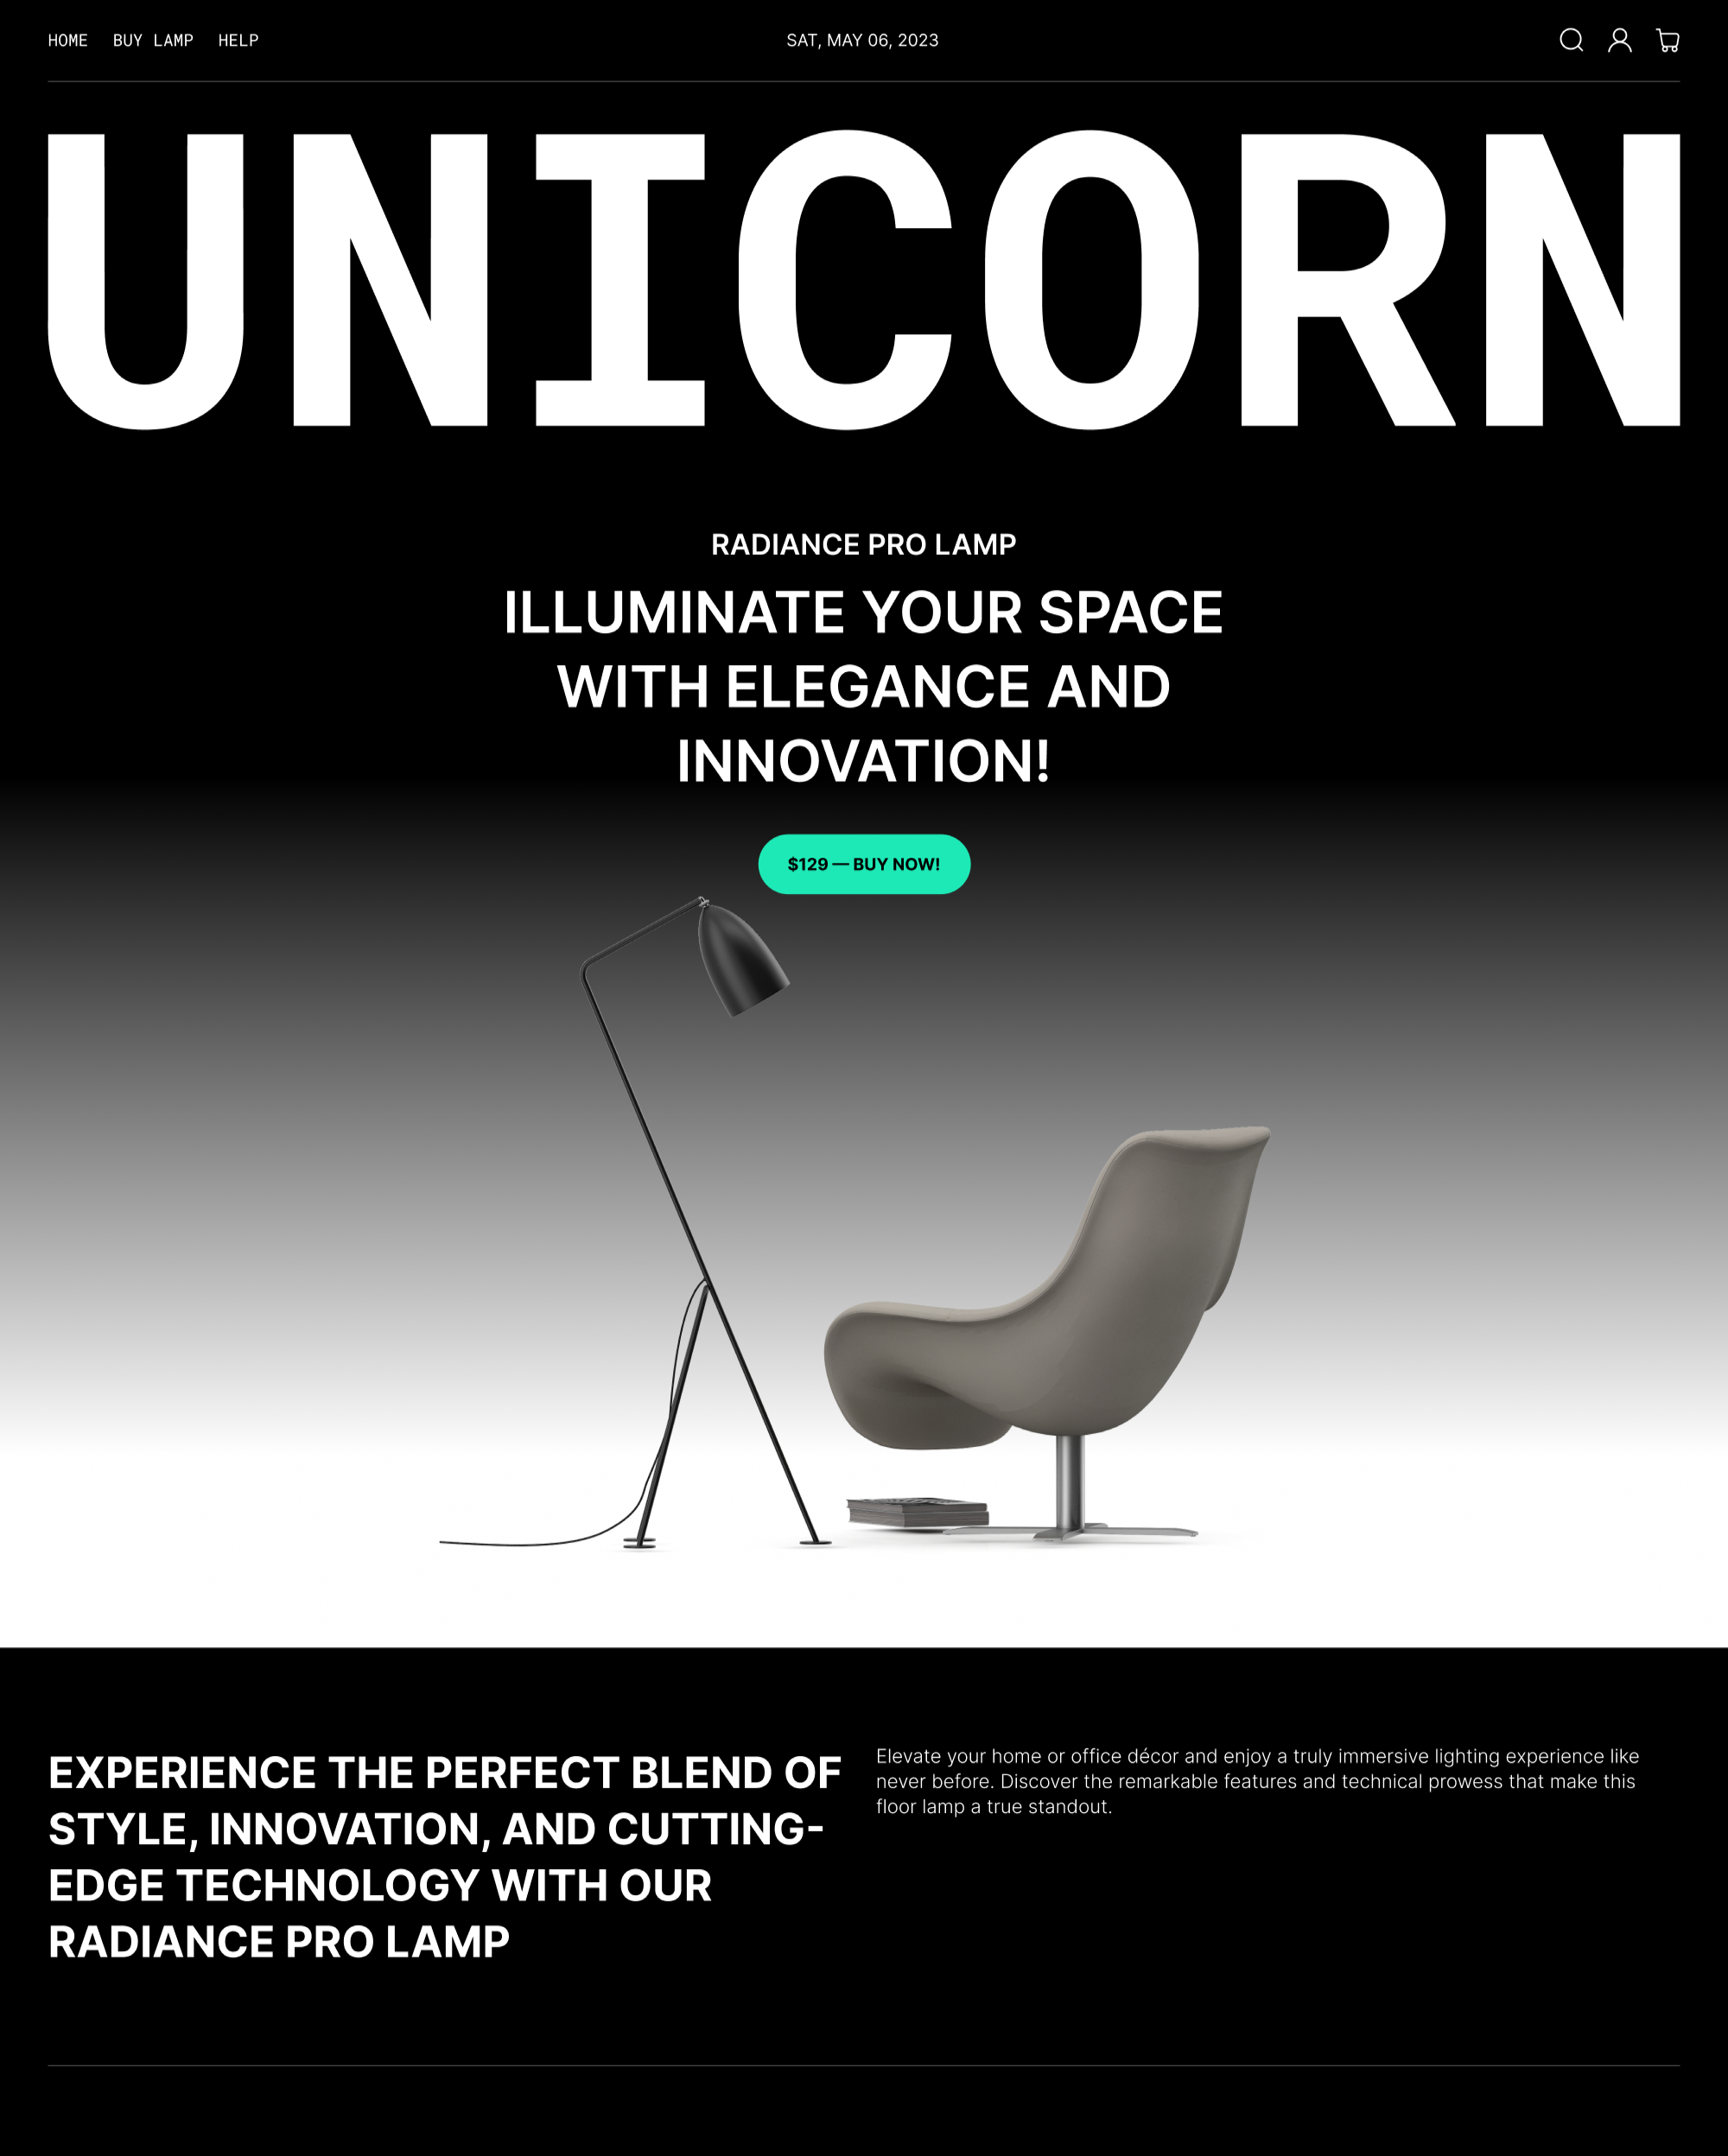 Desktop preview for Unicorn in the "Dark" style